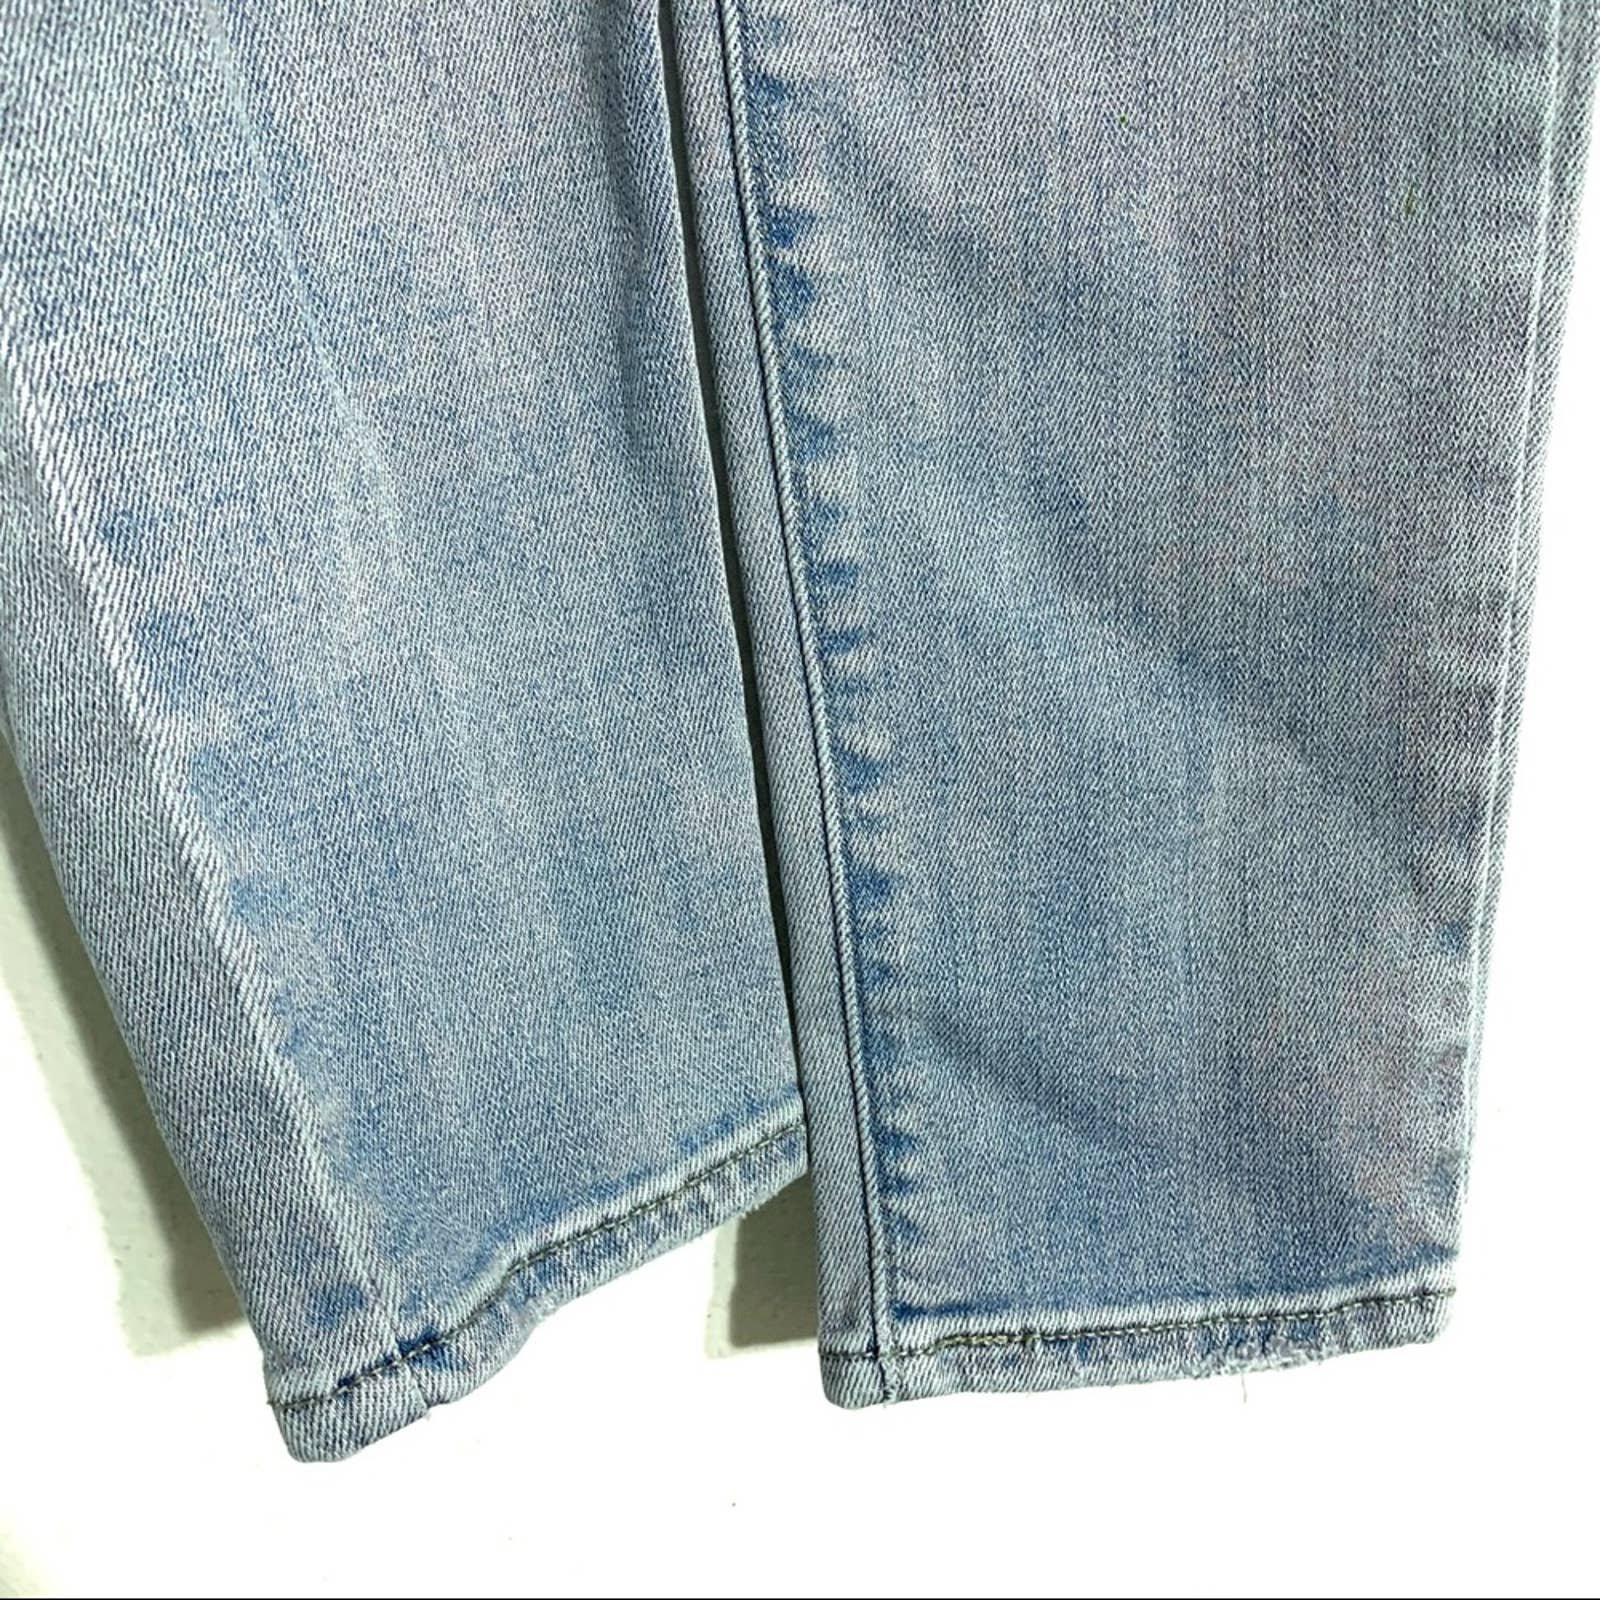 good price Levi’s 721 High Rise Skinny Jeans Distresses Light wash stretch EUC size 28 ponYInyv7 Zero Profit 